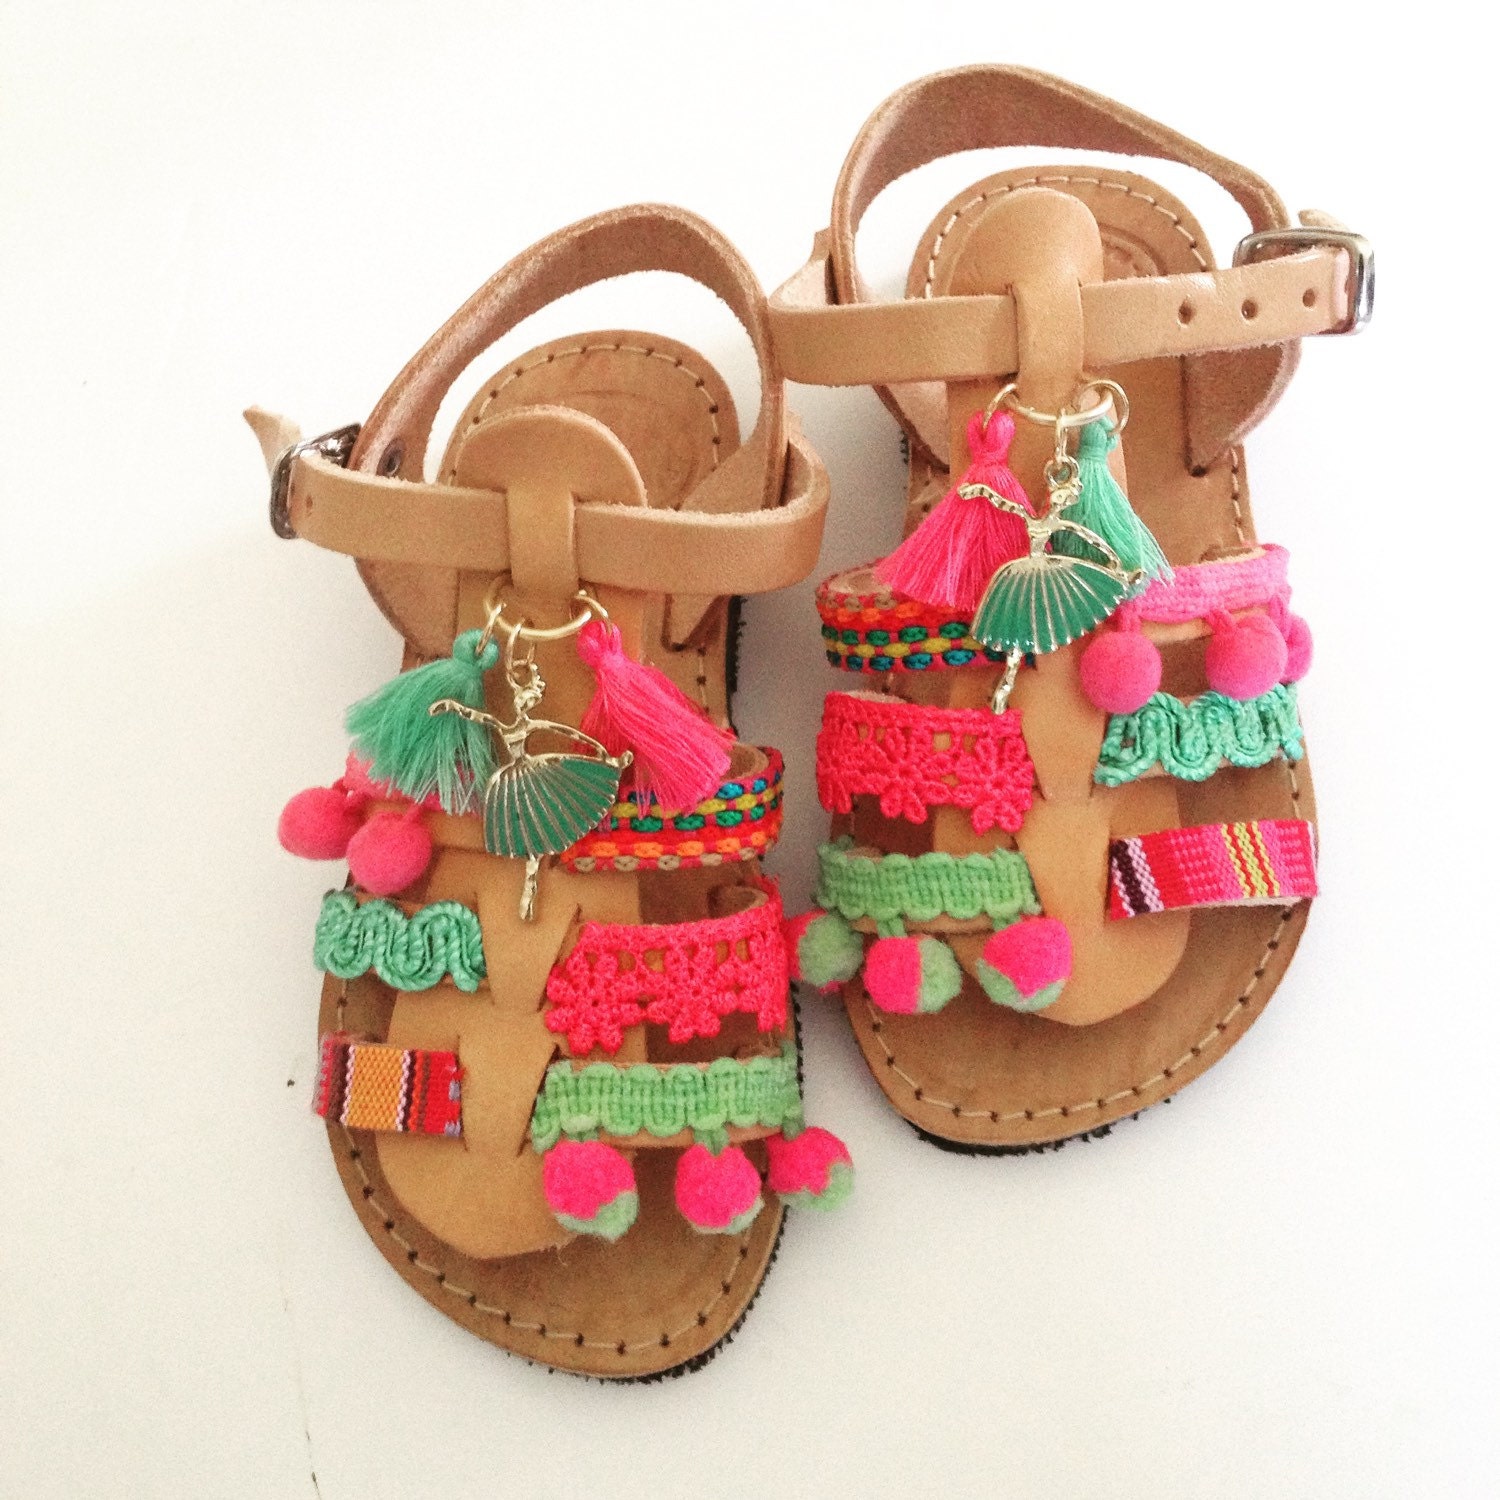 Ethnic baby leather sandals